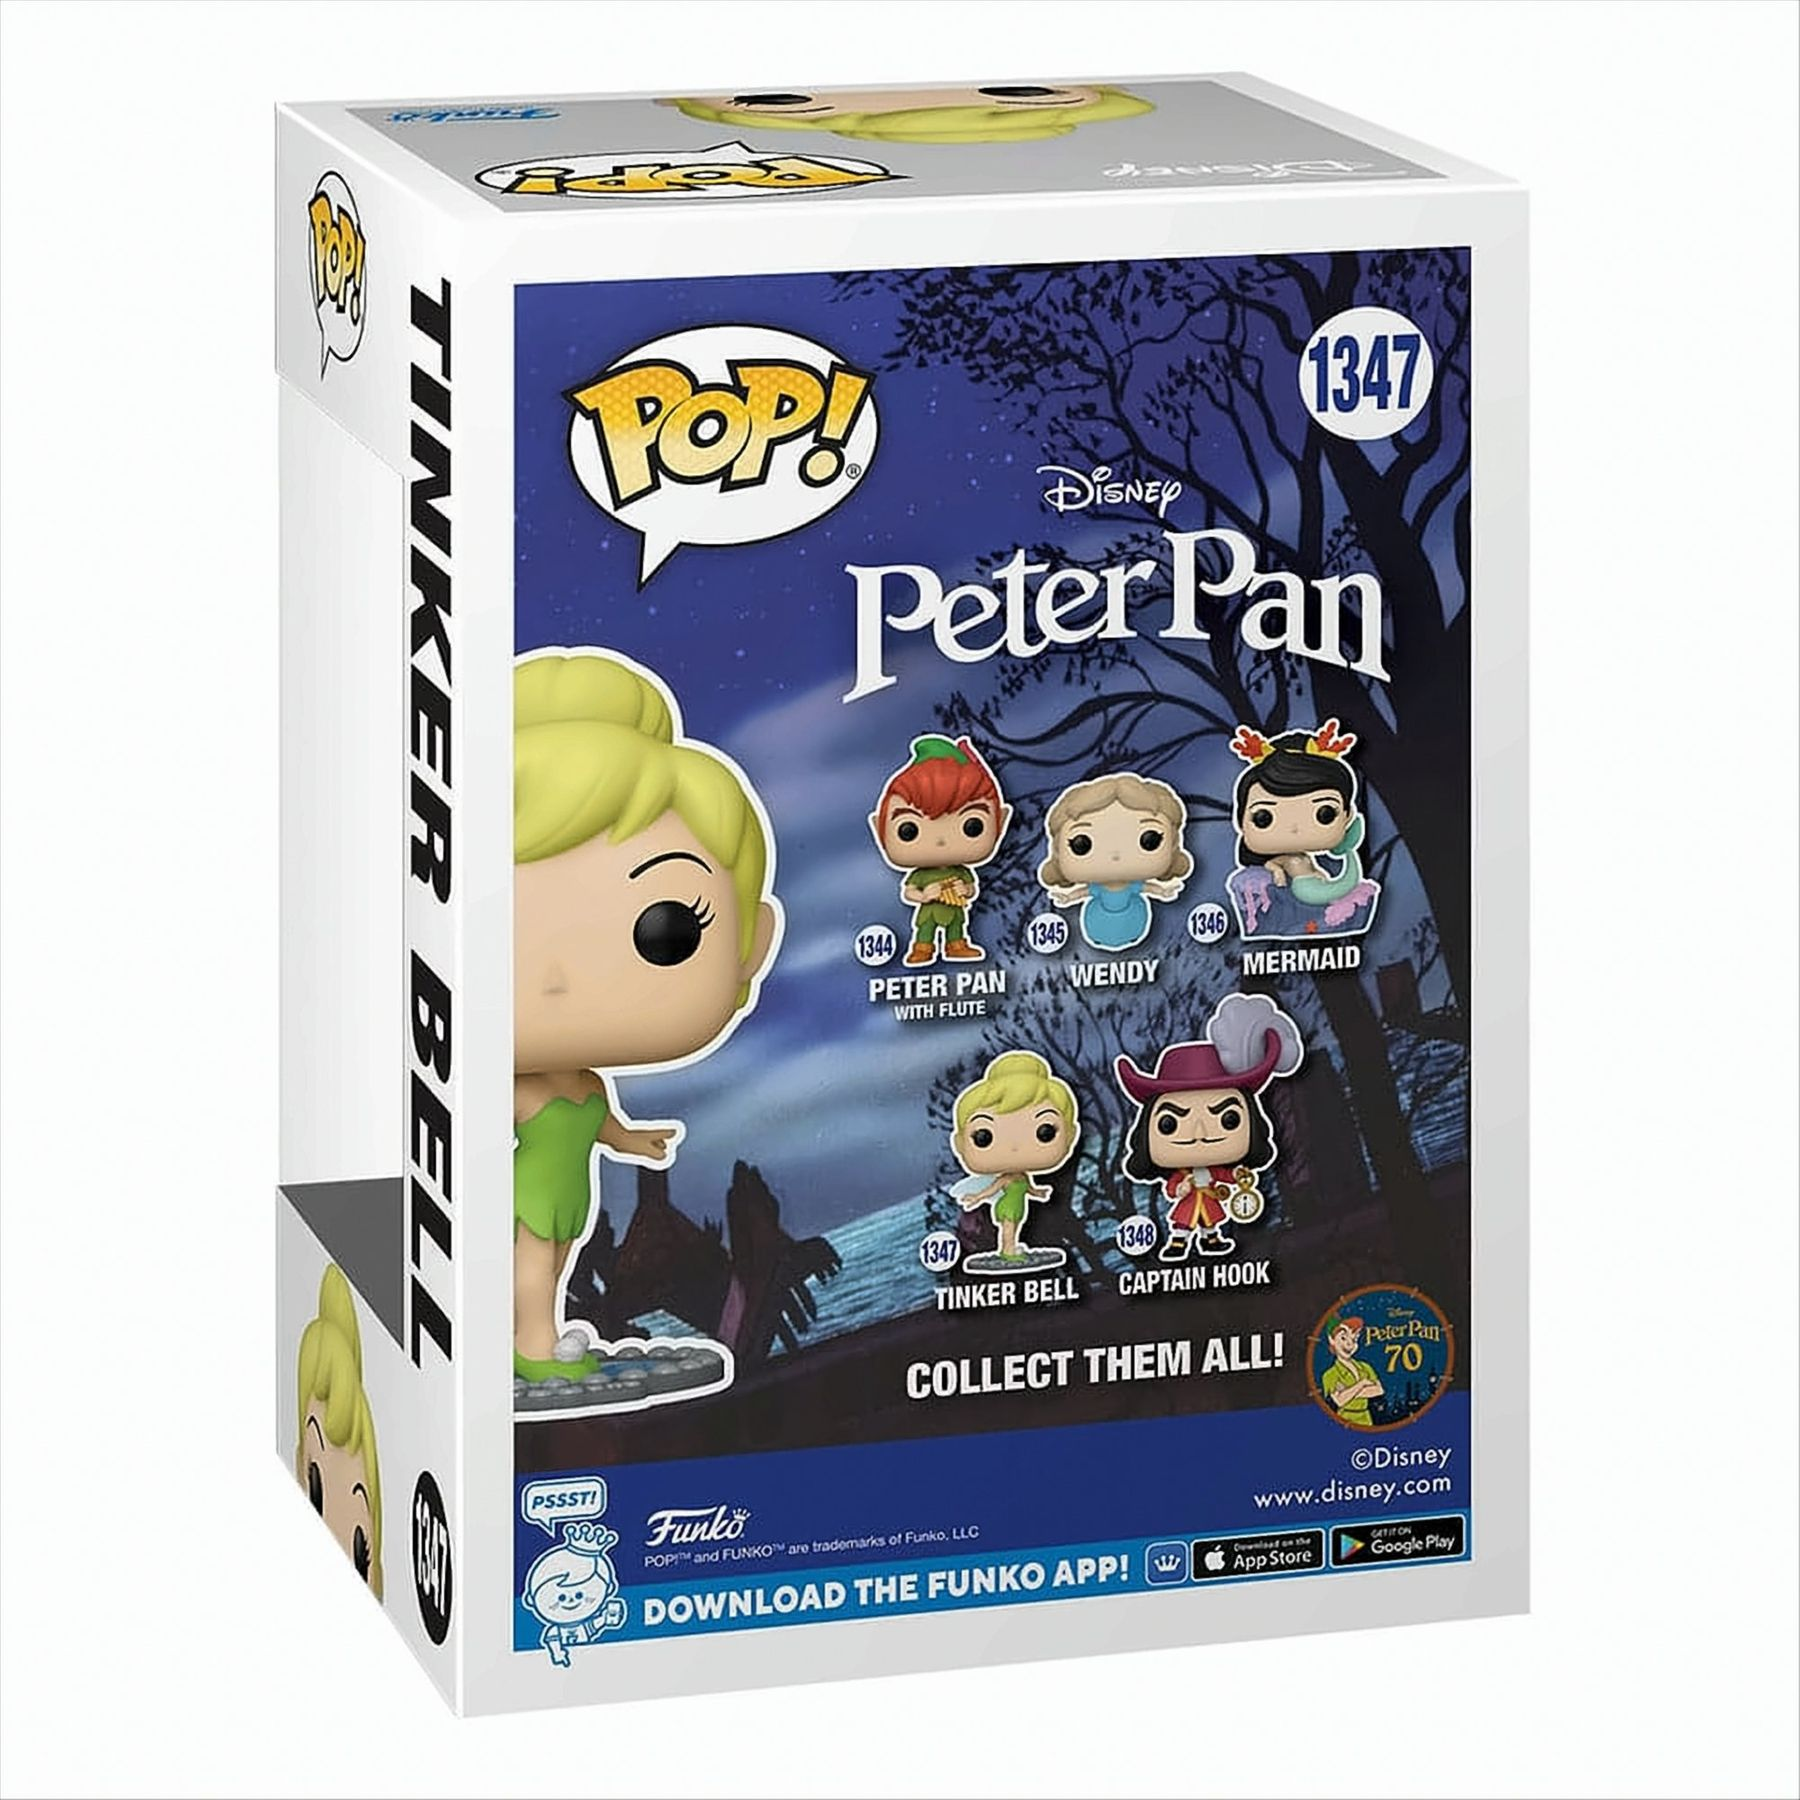 Disney - Bell 70th POP Tinker Pan Peter -